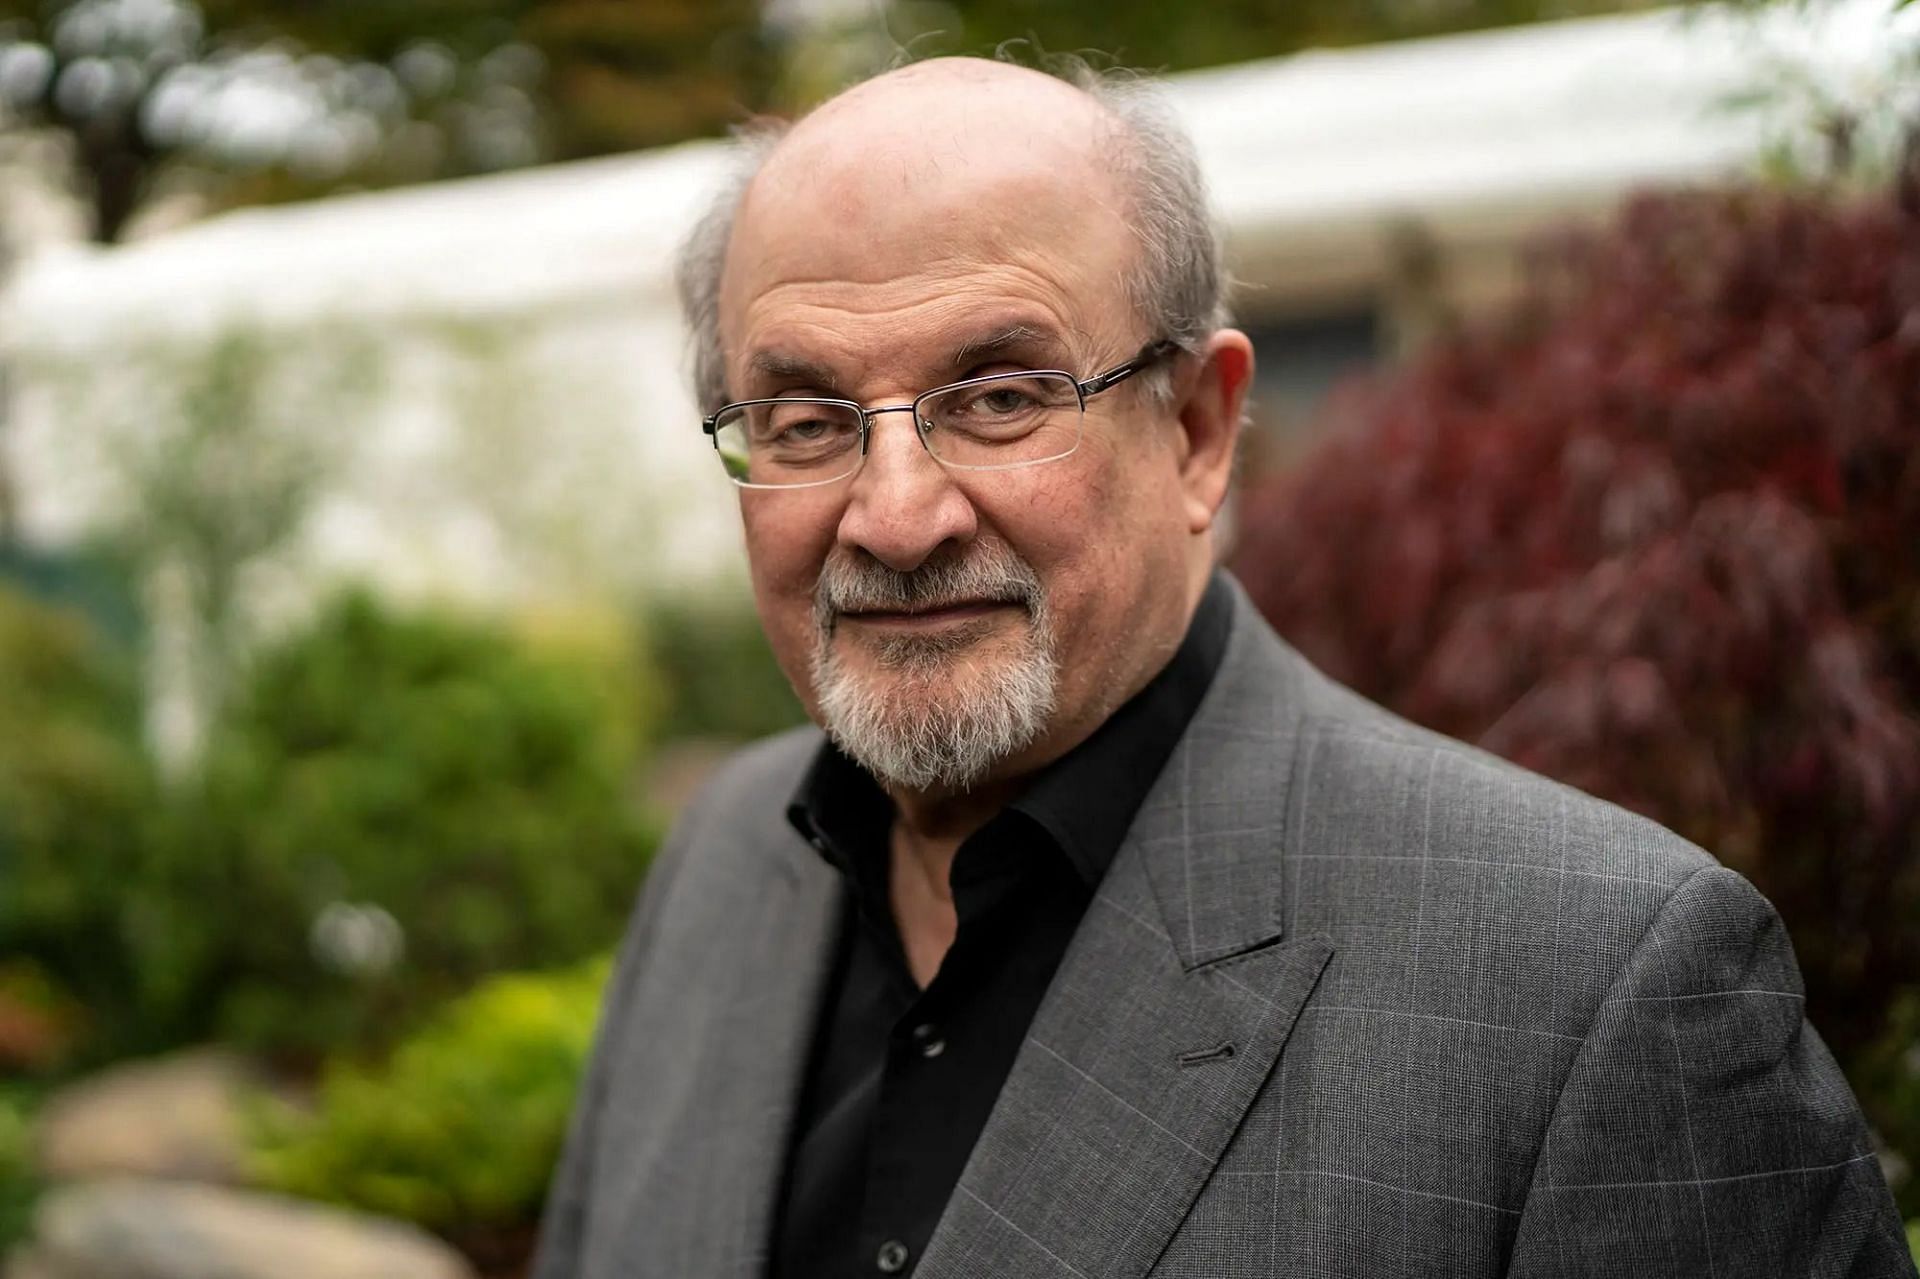 Salman Rushdie (Image via David Levenson/Getty Images)